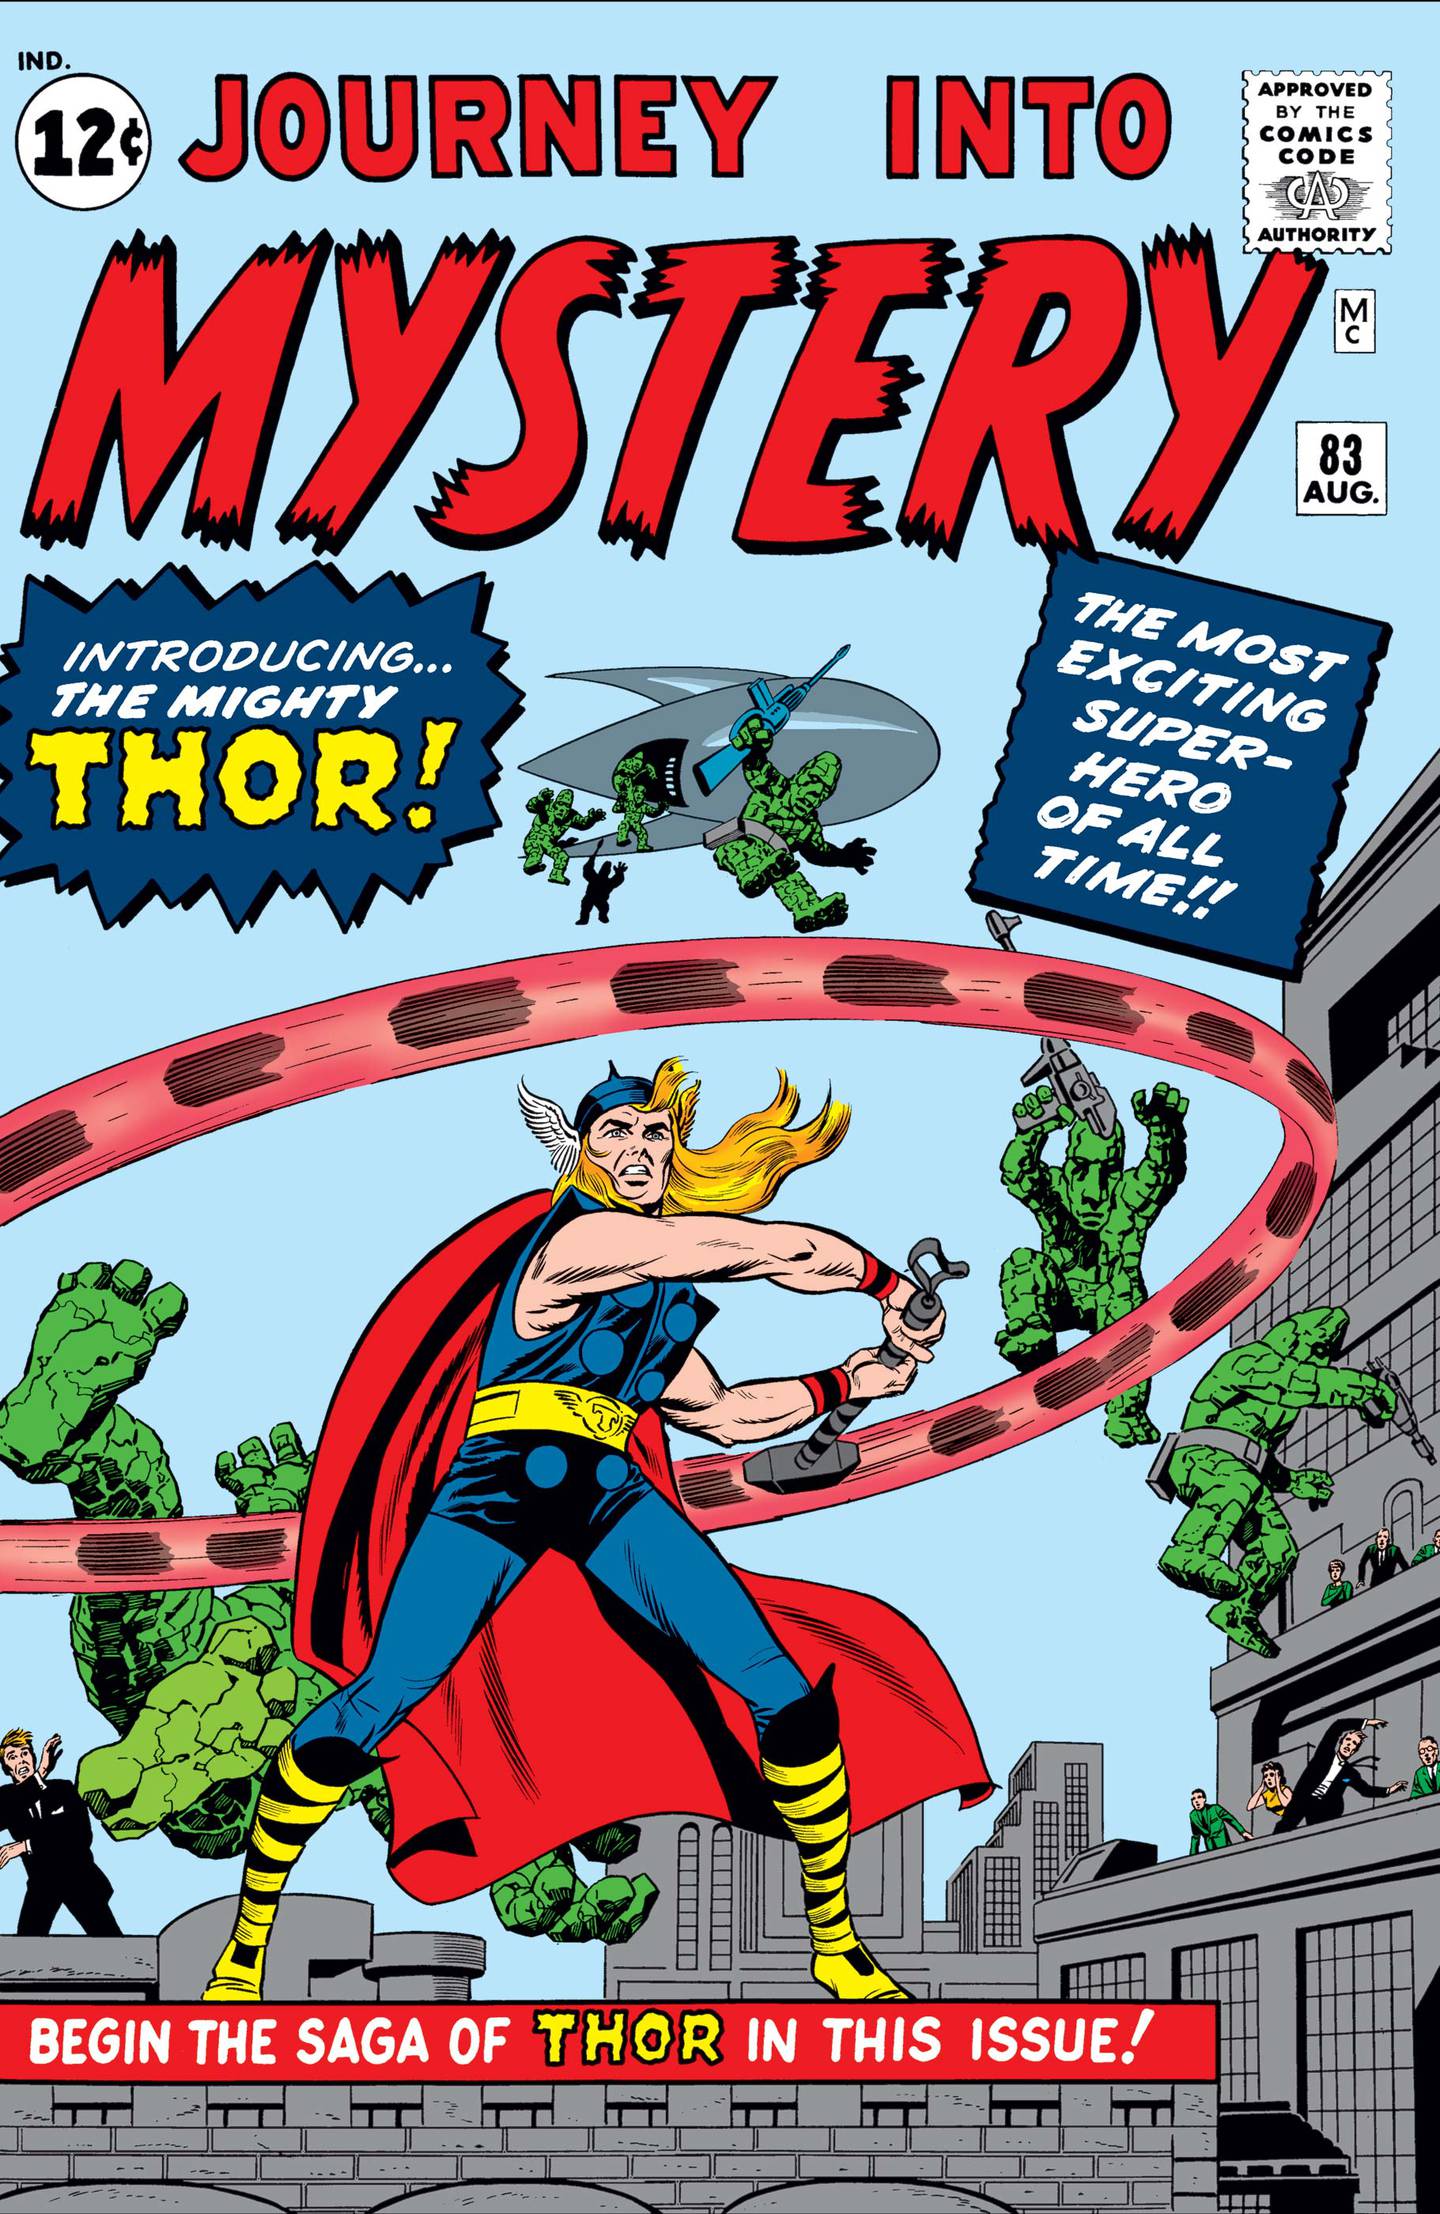 Primer cómic de Thor